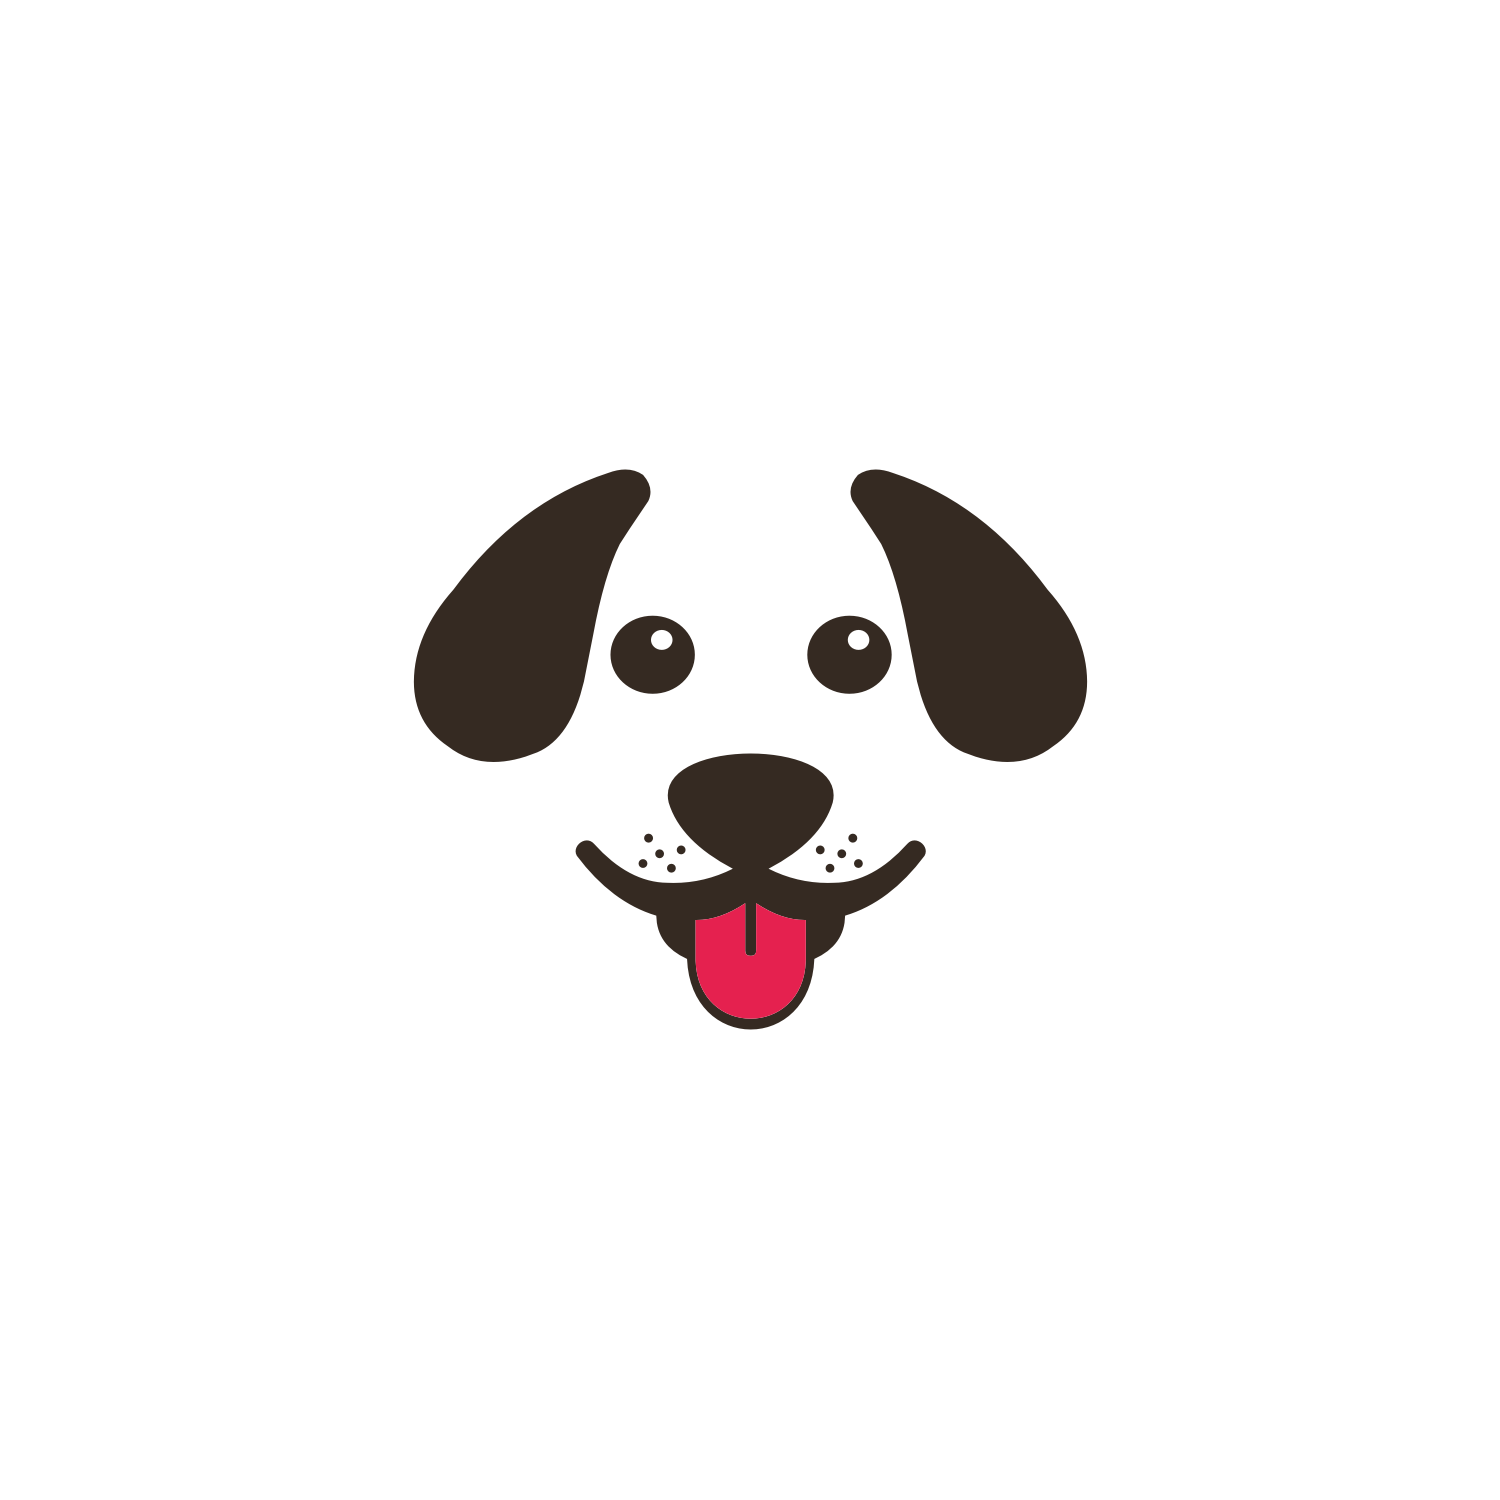 Dog Head Logo Vector Design cover image.